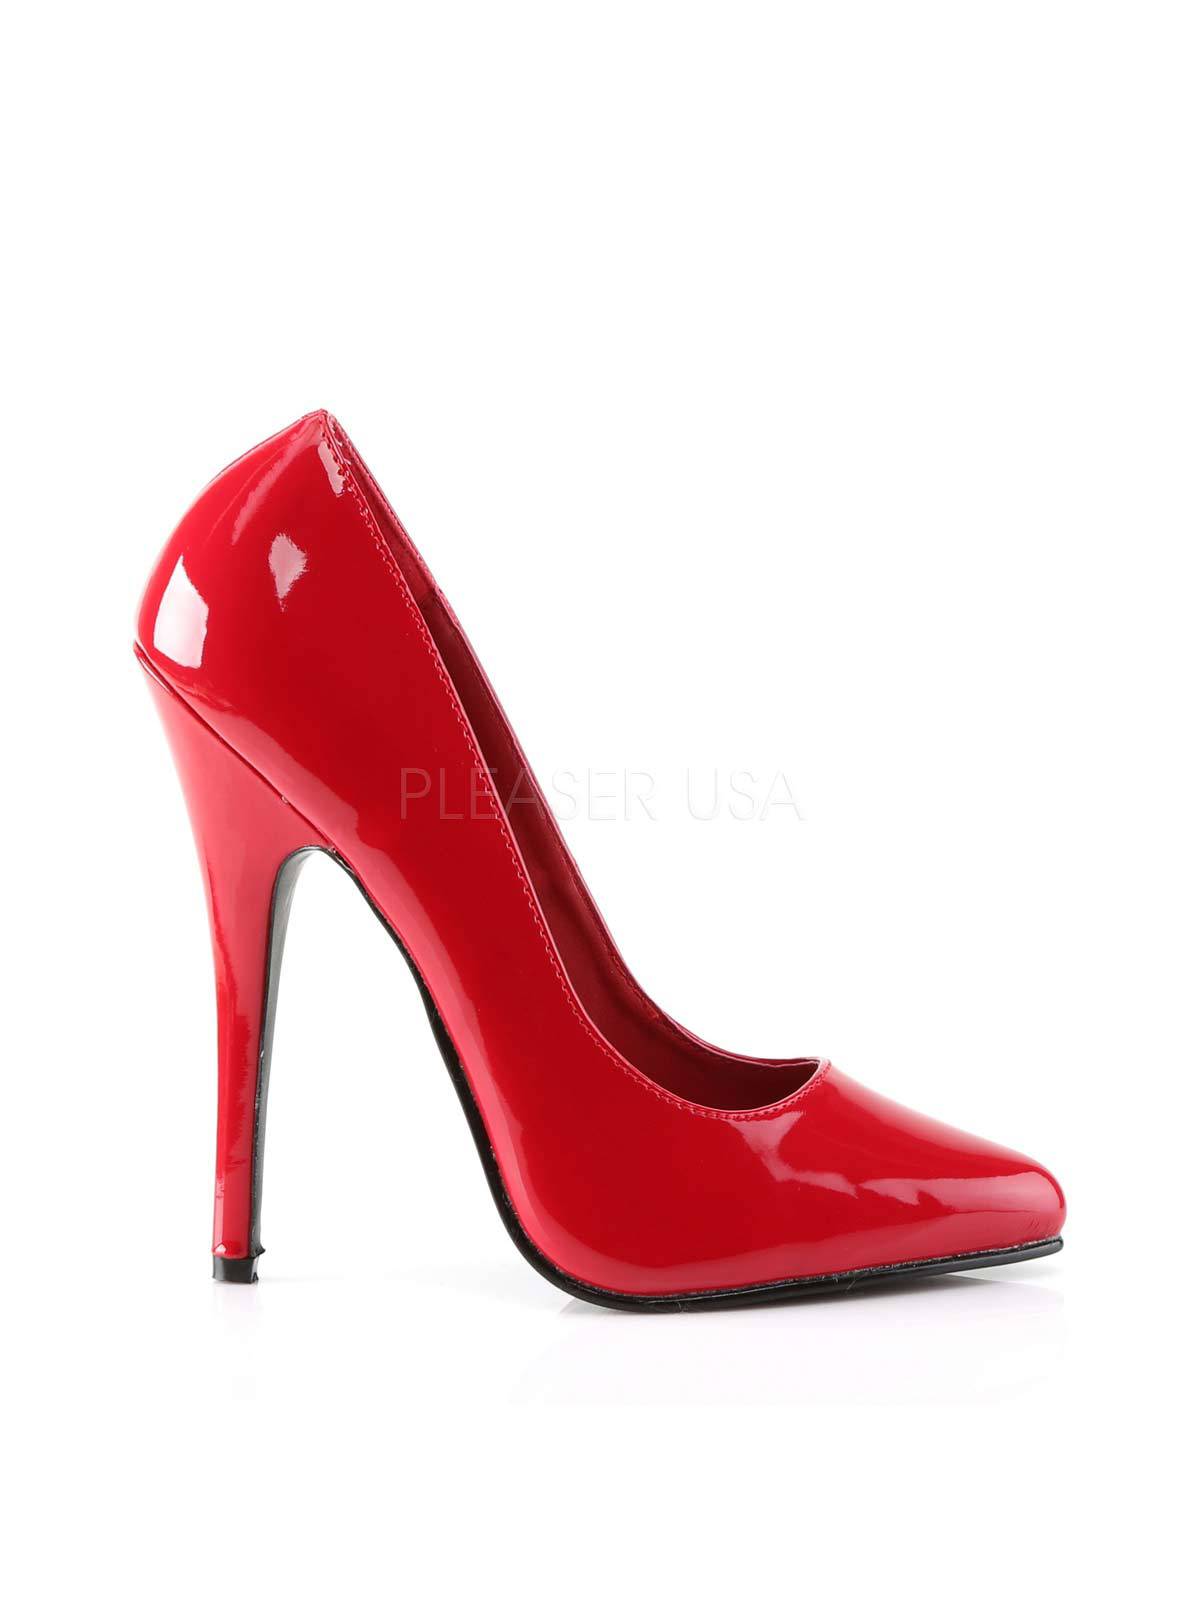 lackpump, pump, pumps, high heels, extrem stiletto, rote pumps, extrem hohe high heels, high heels extrem, leder high heels, sehr hohe high heels, super hohe pumps, übergrösse, rot, rote heels